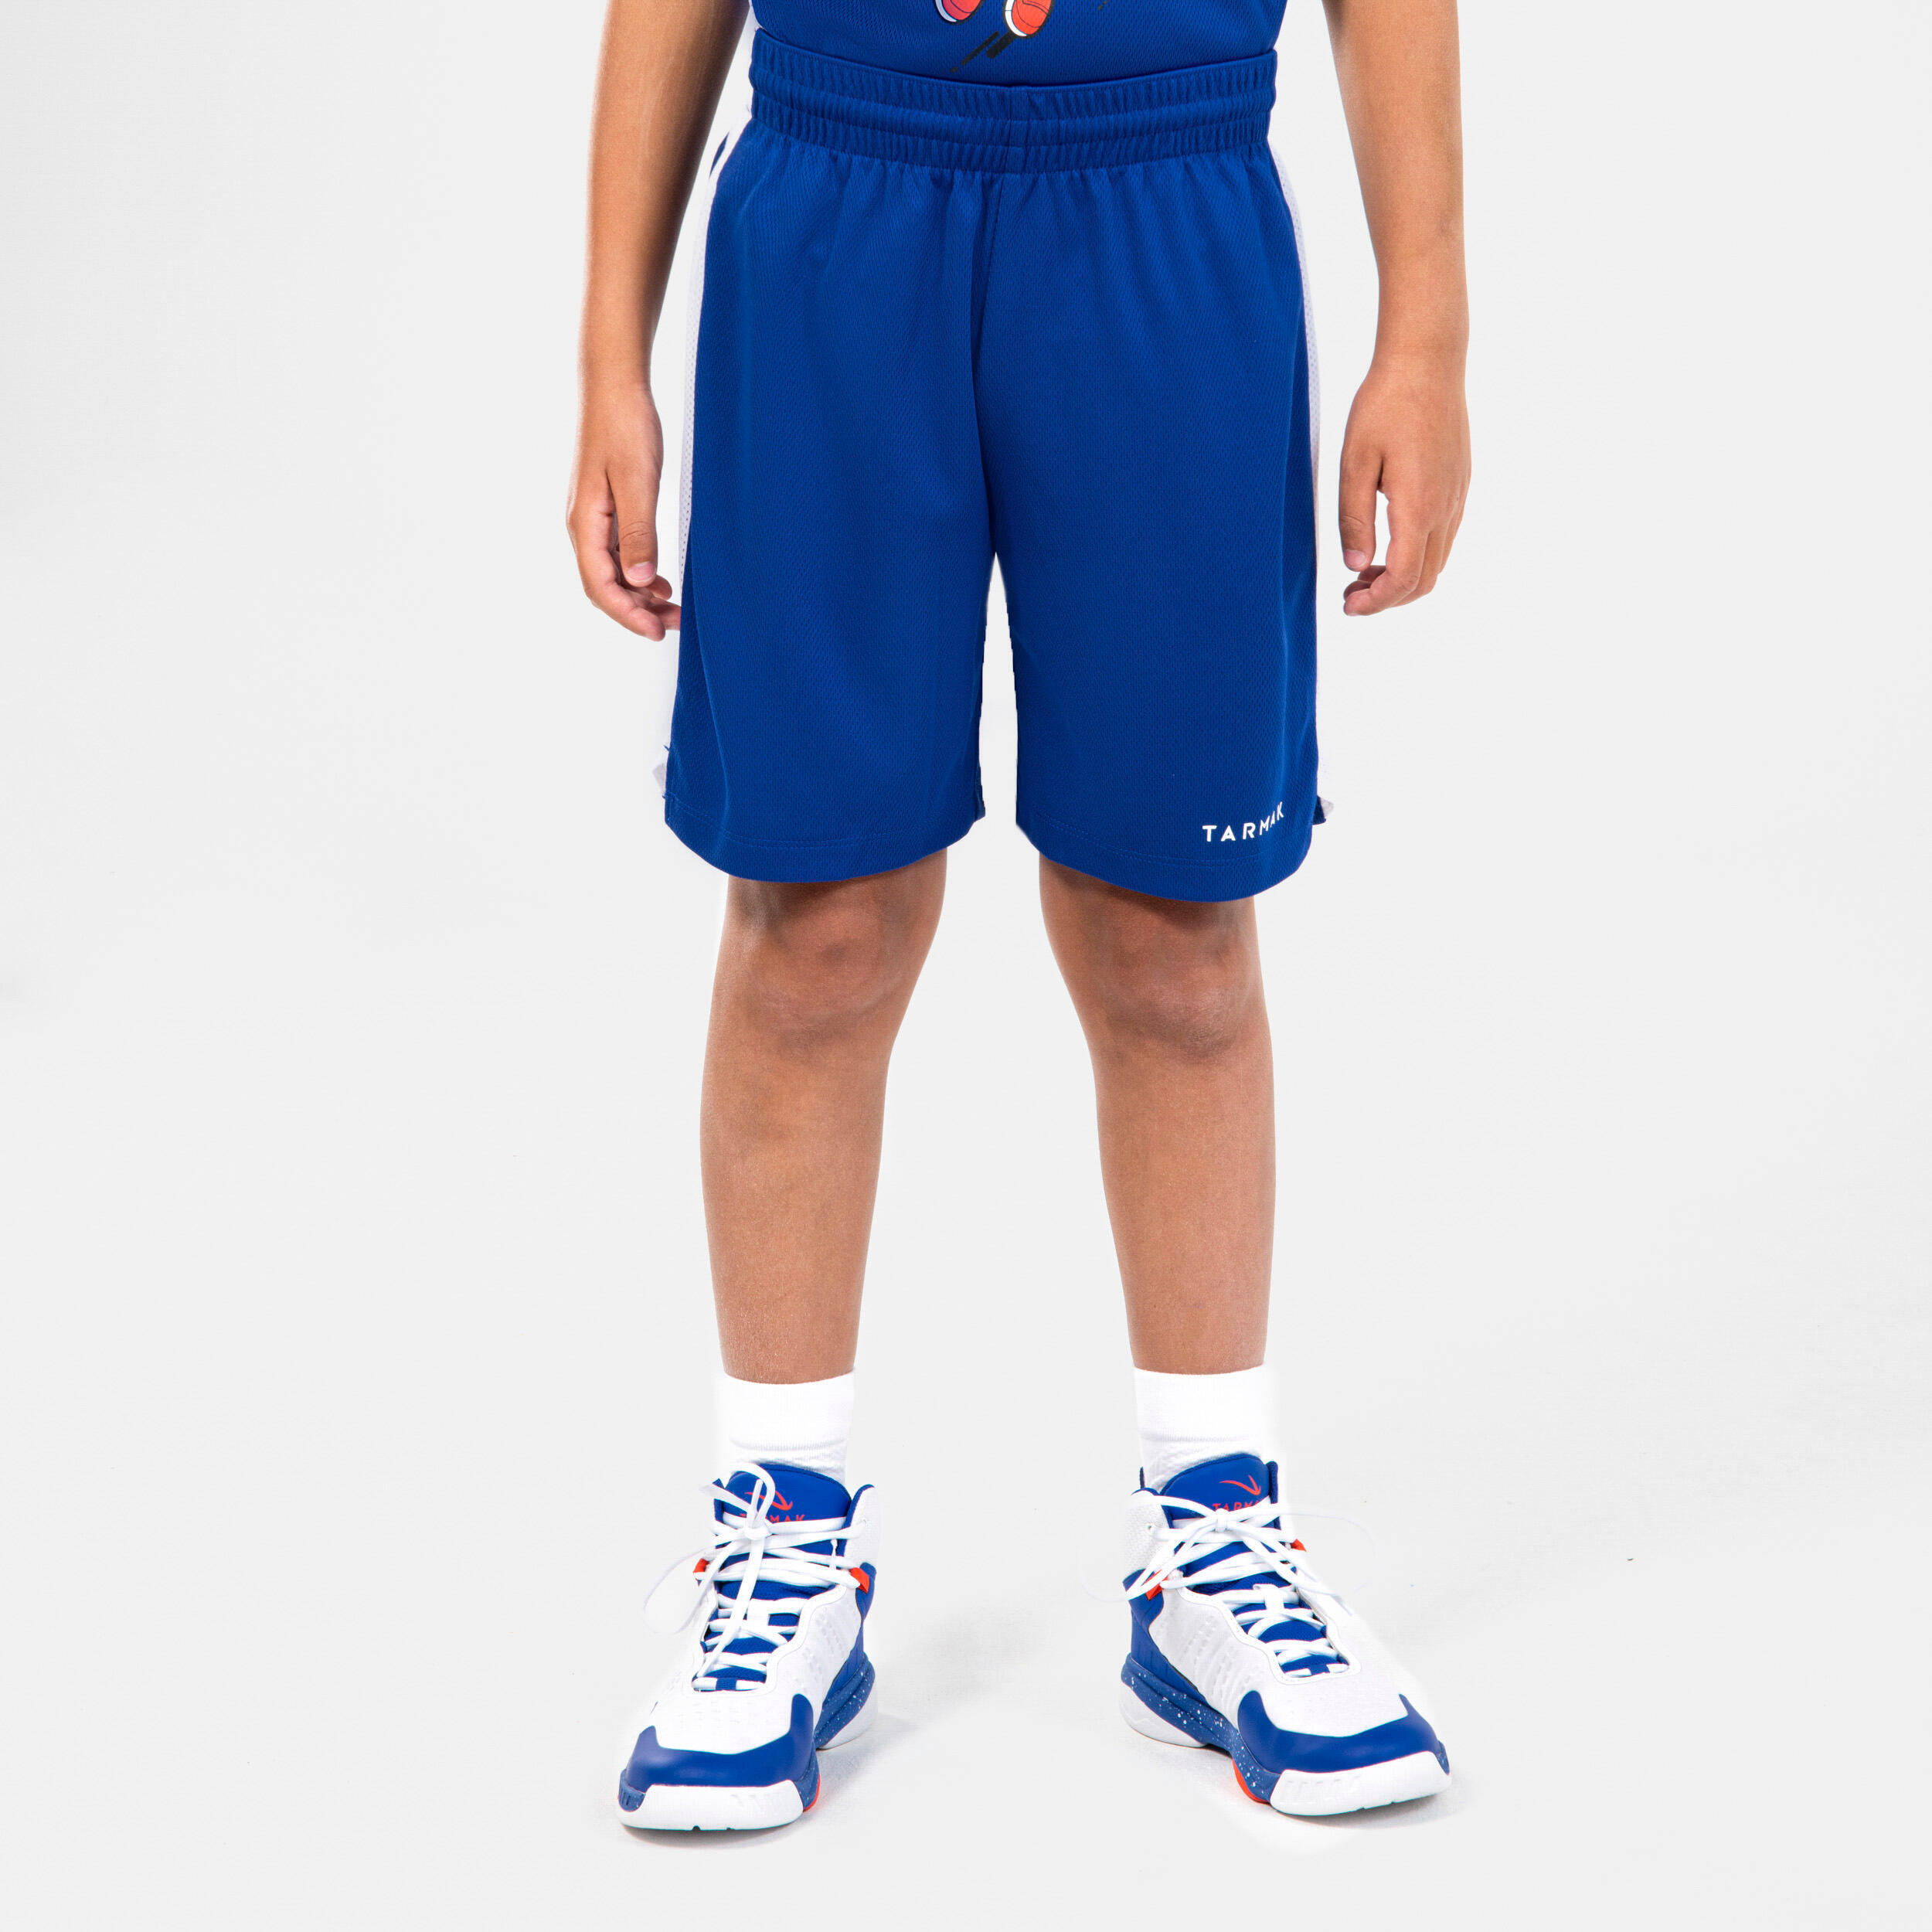 TARMAK Kids' Basketball Shorts SH500 - Blue/White